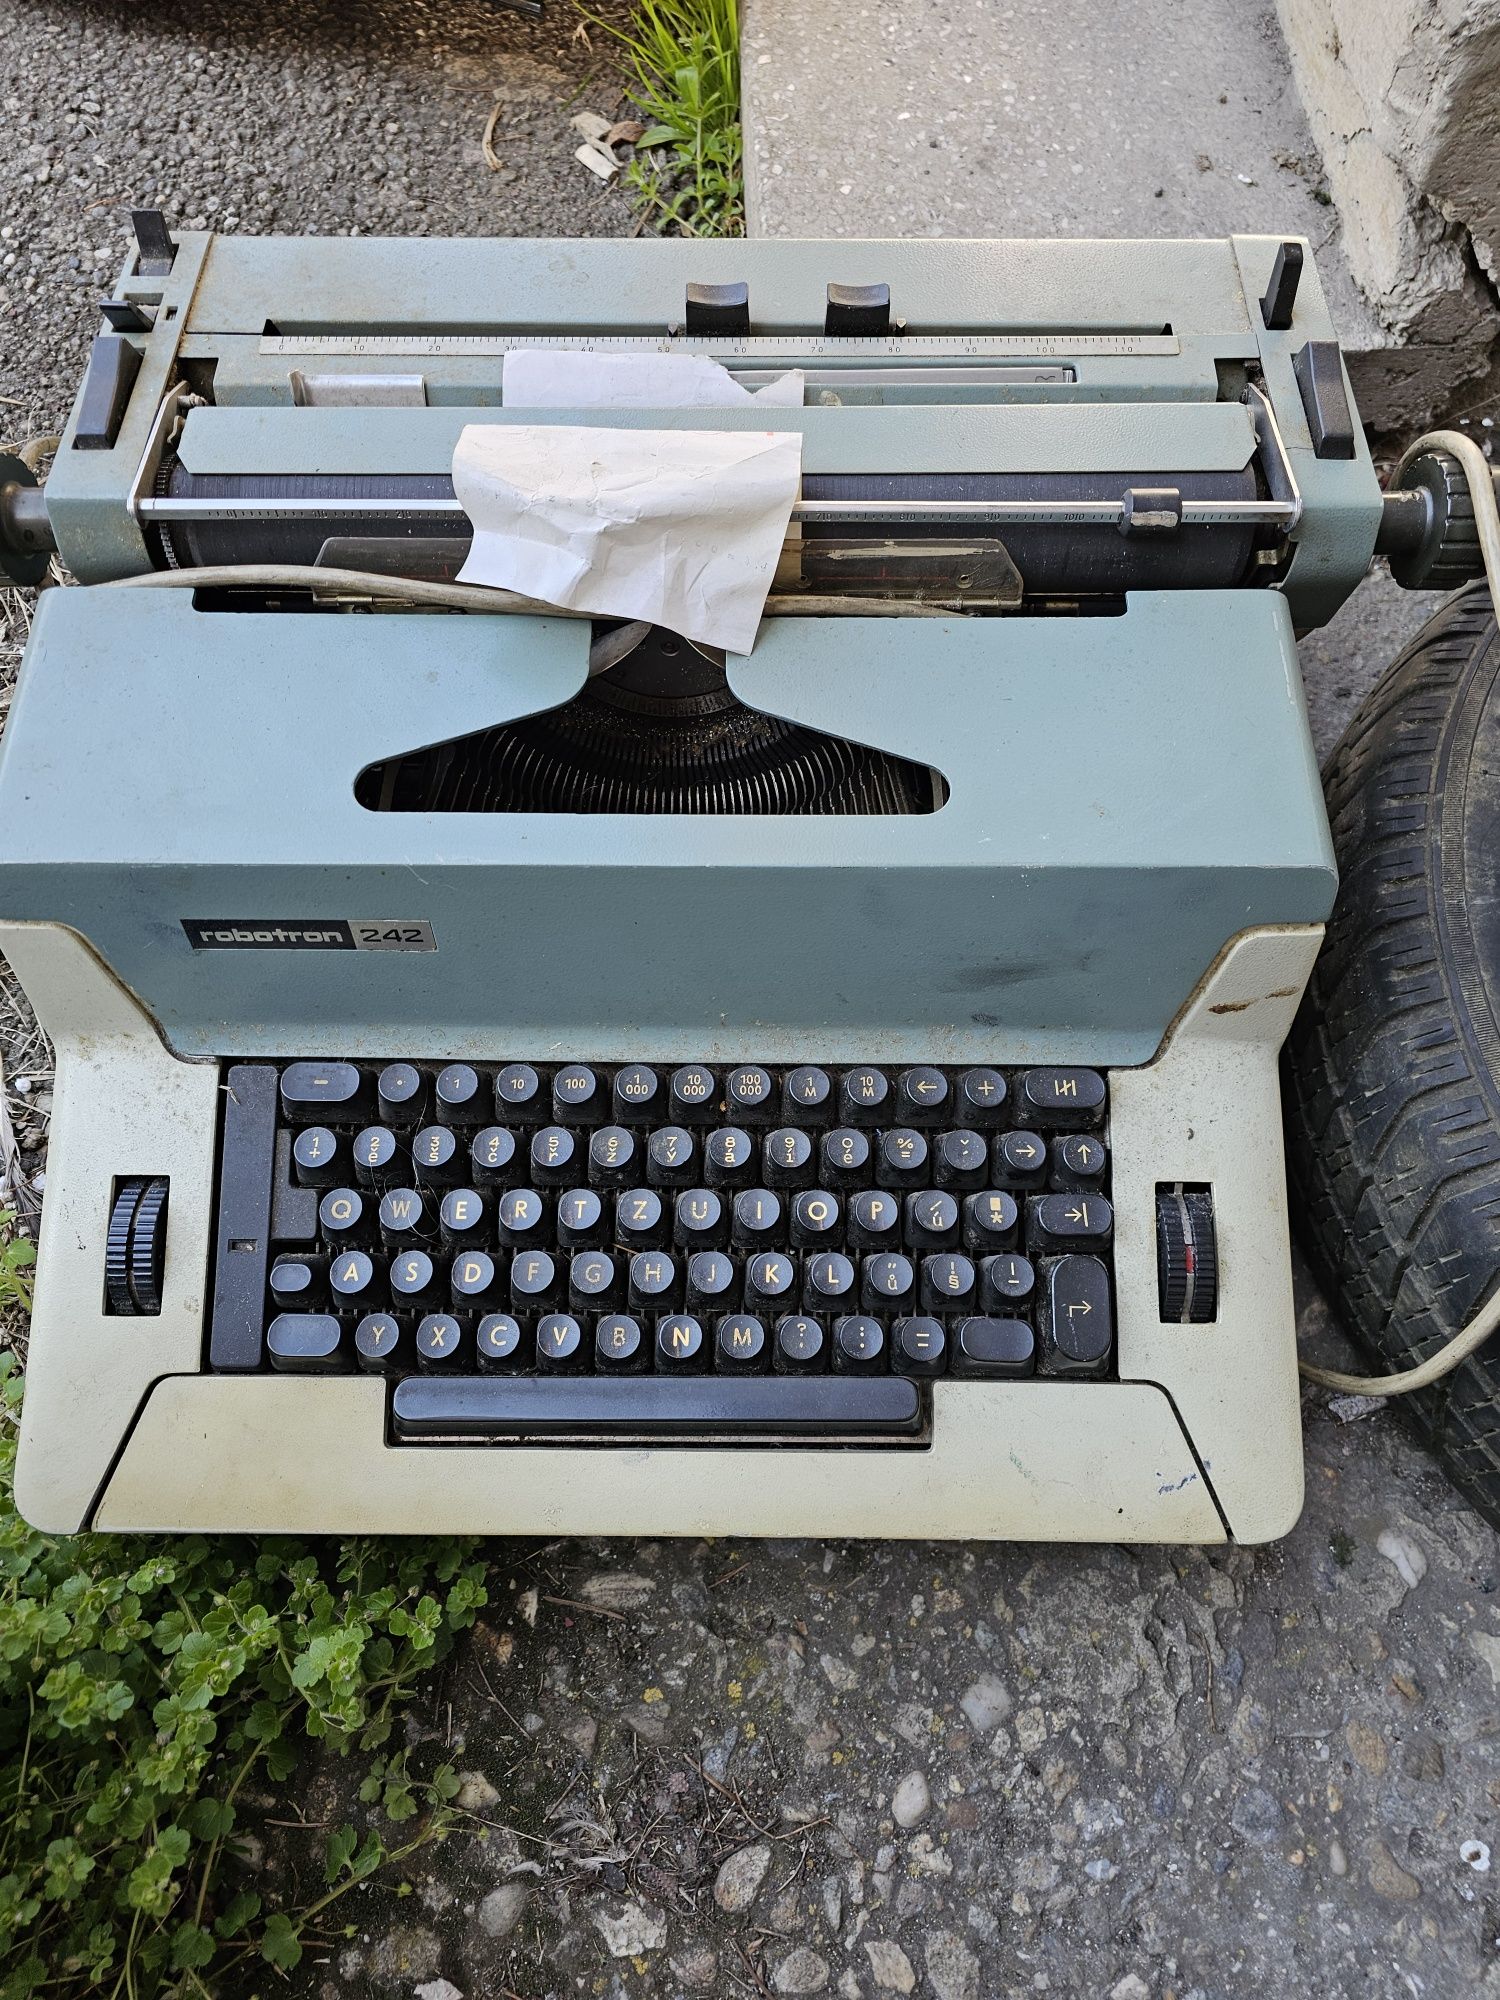 Vand mașina de scris Robotron 242